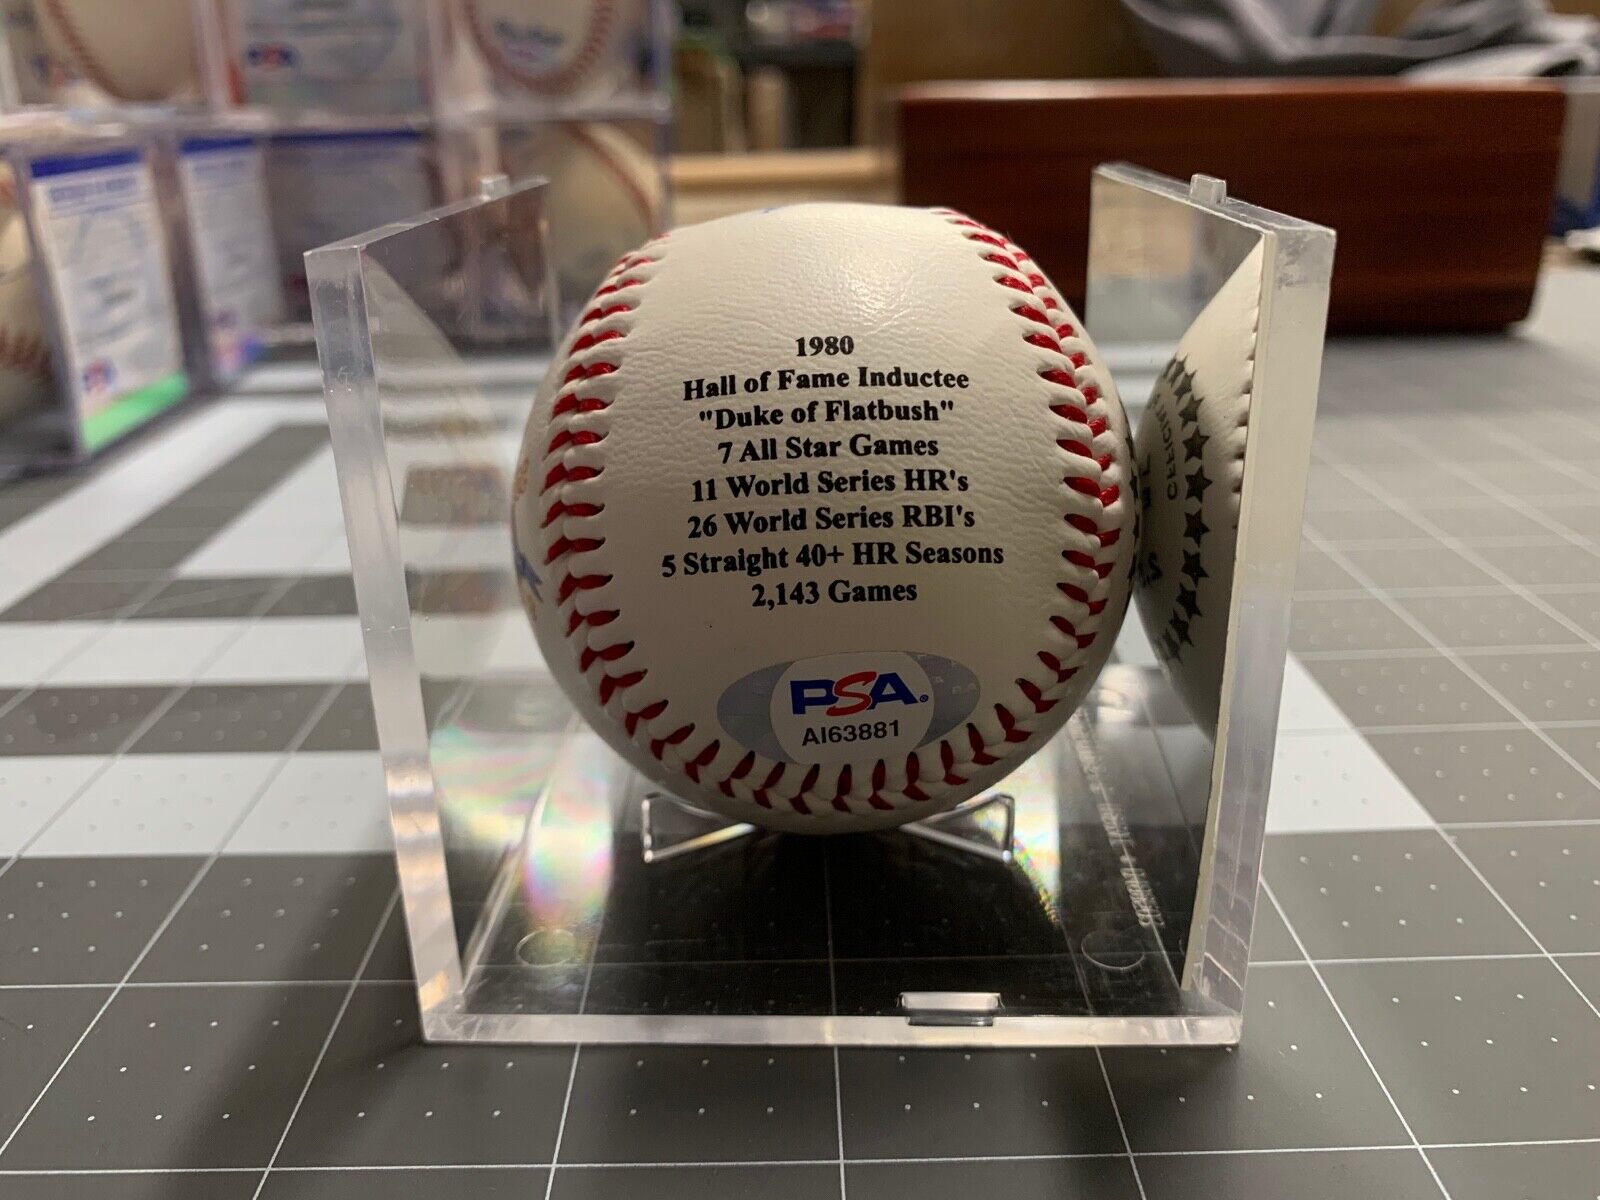 Duke Snider Autographed 4 Limited Edition Stats Baseball PSA Certified AI63881